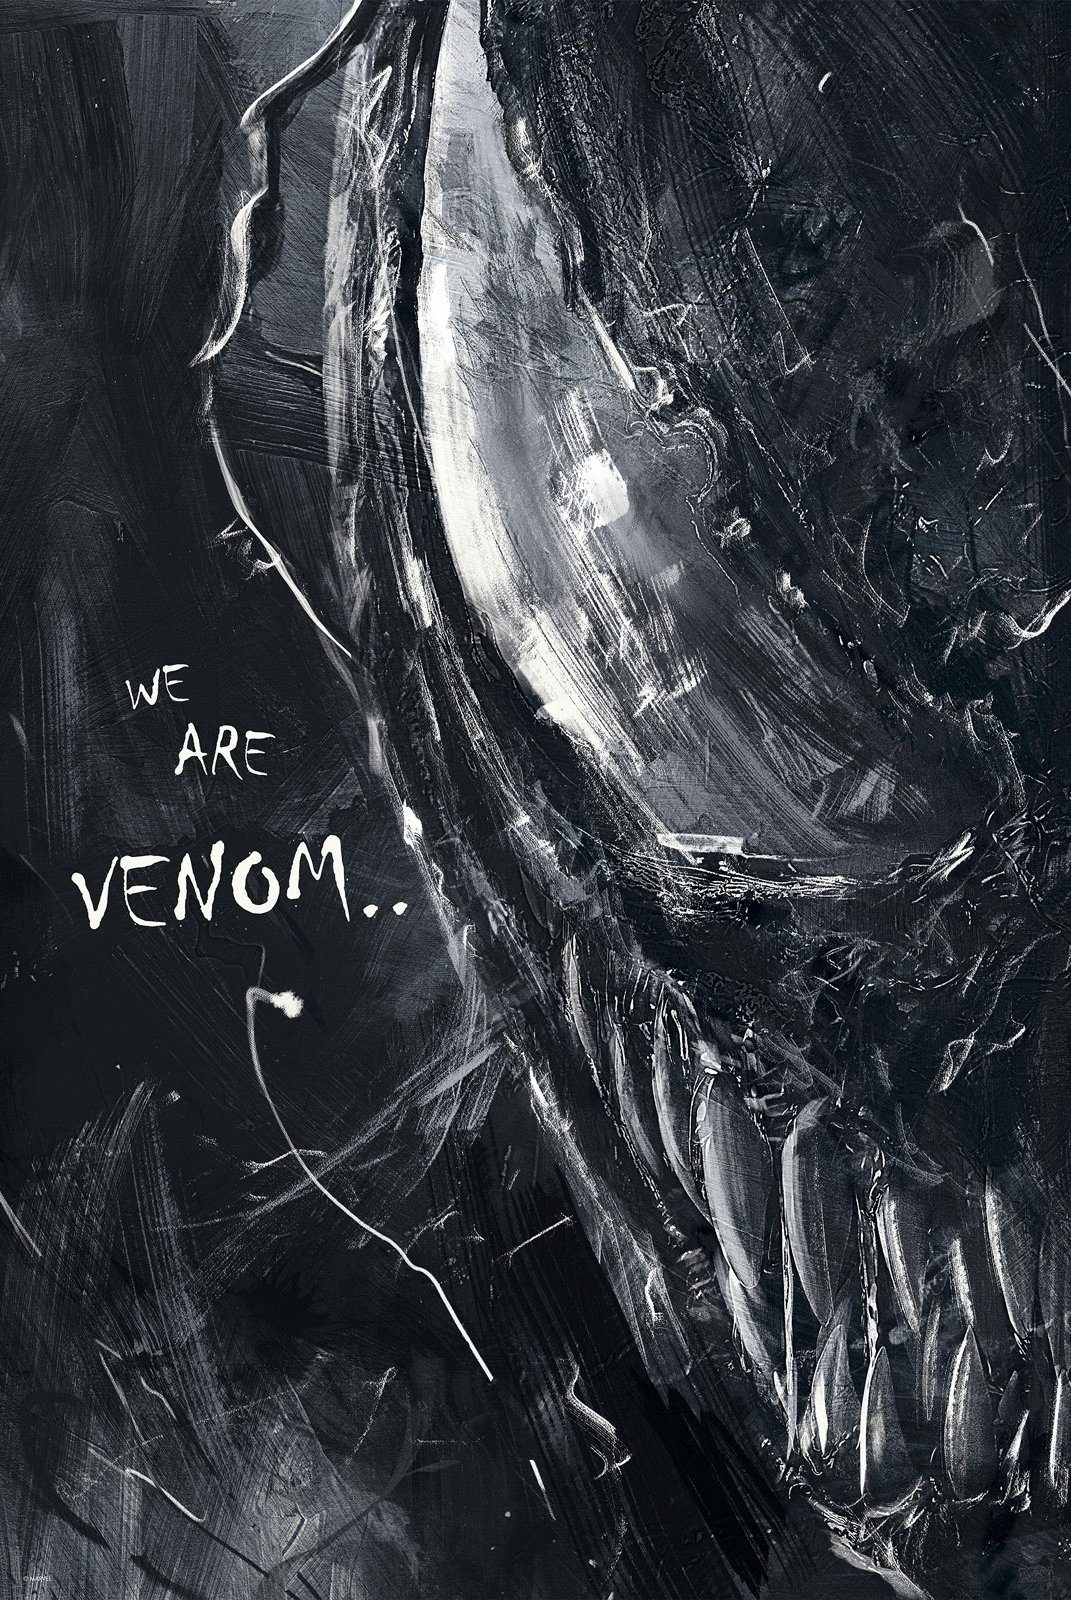 Grupo Erik x Poster Venom Marvel cm We 61 Are Poster 91,5 Venom